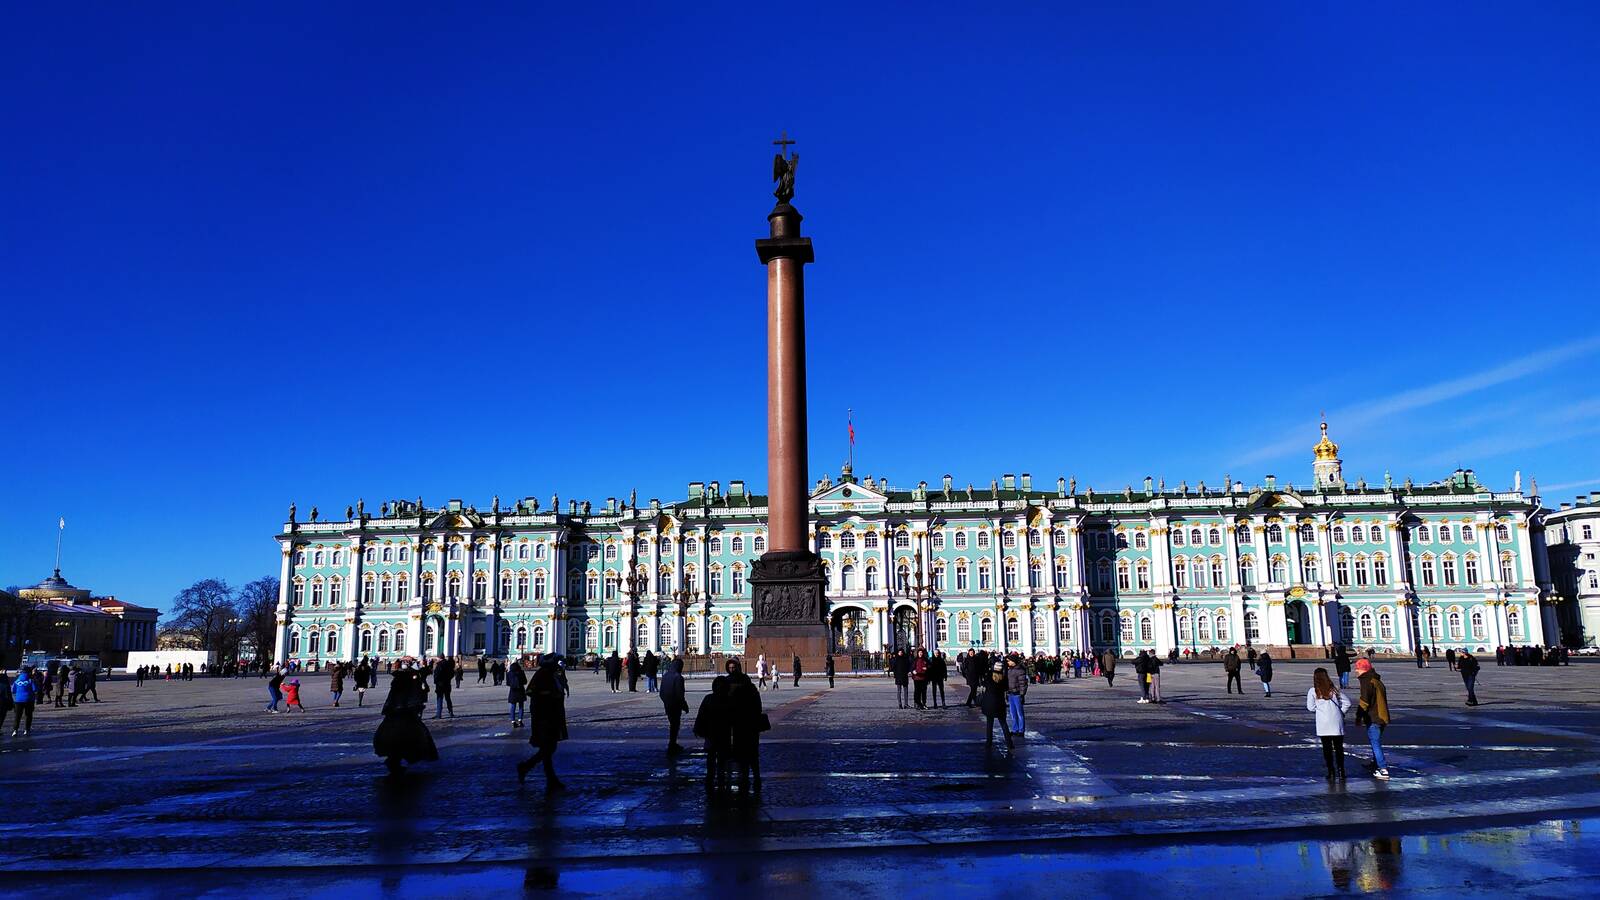 Image of Winter Palace by David Lally